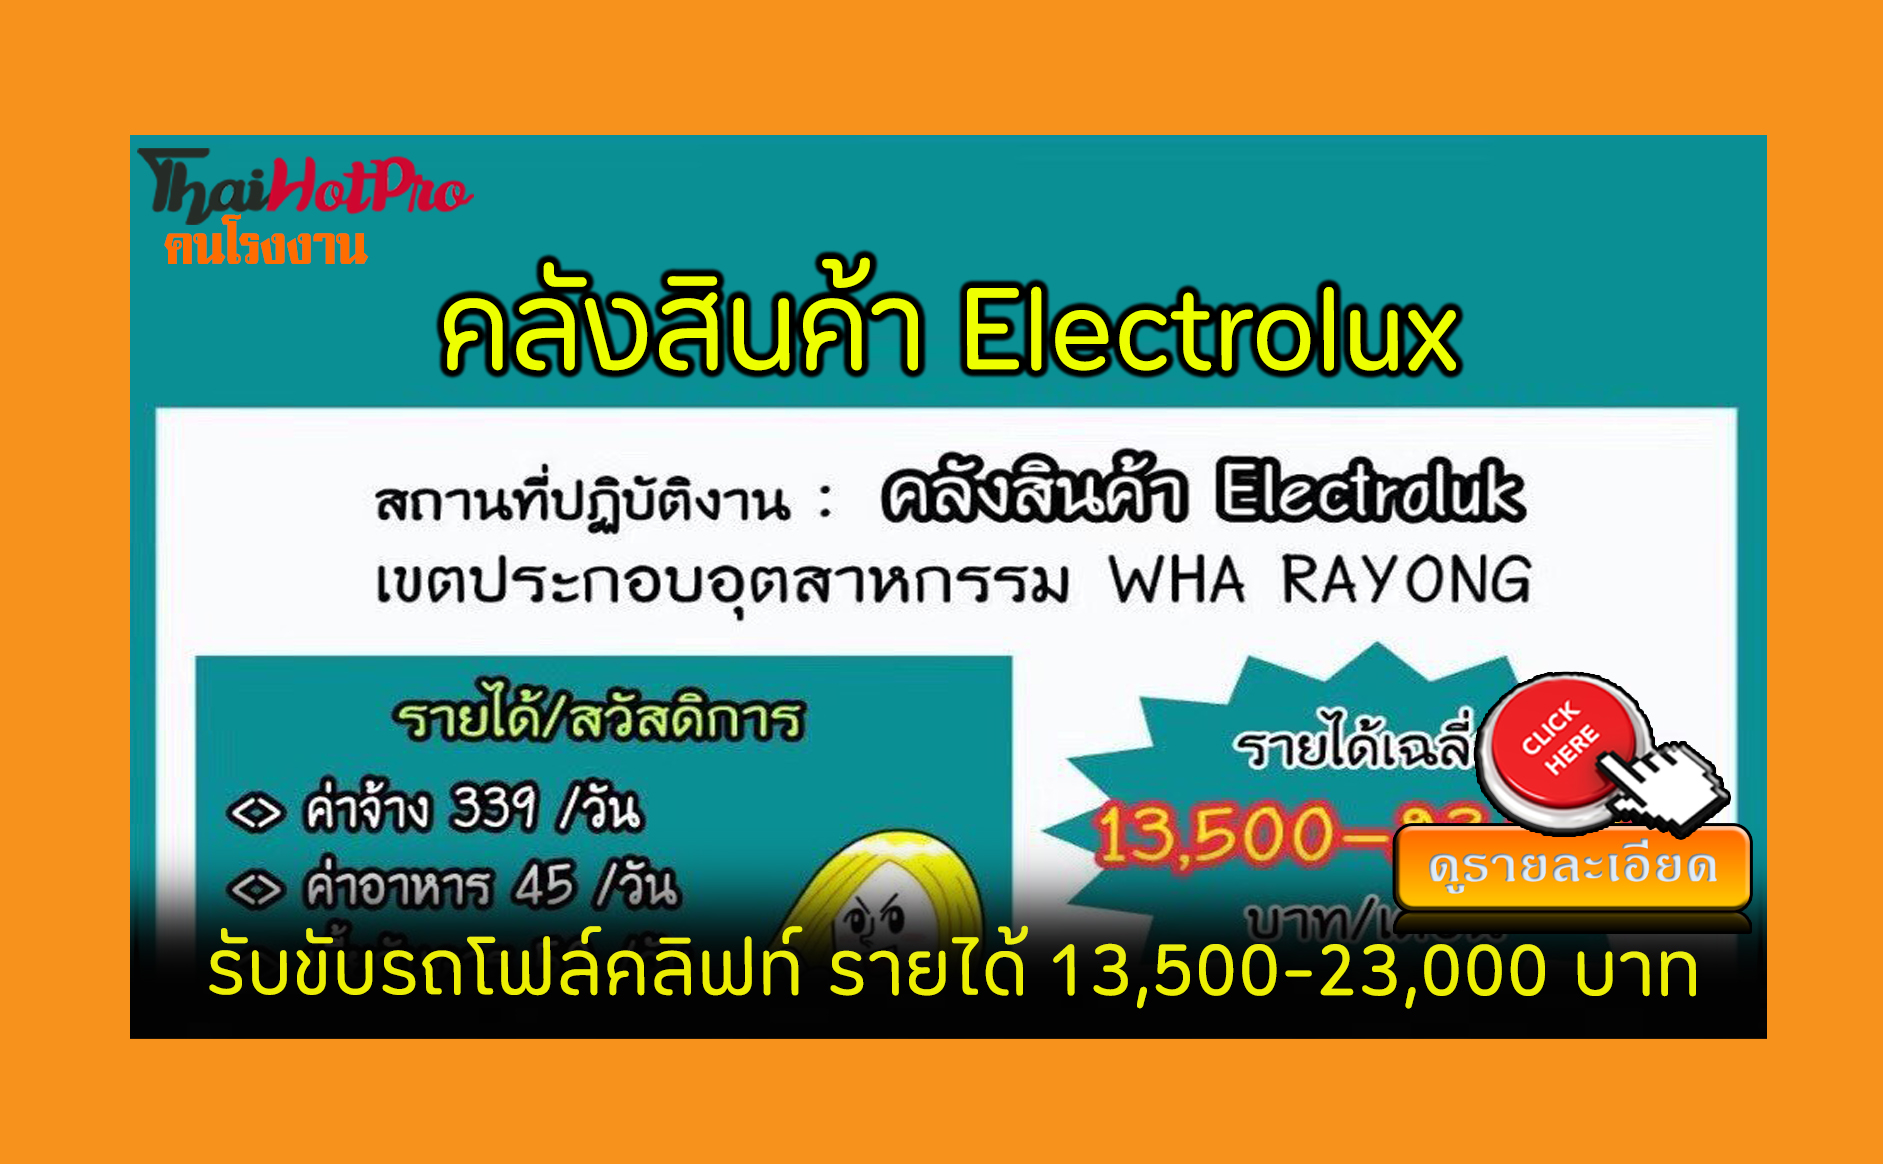 electrolux-academy